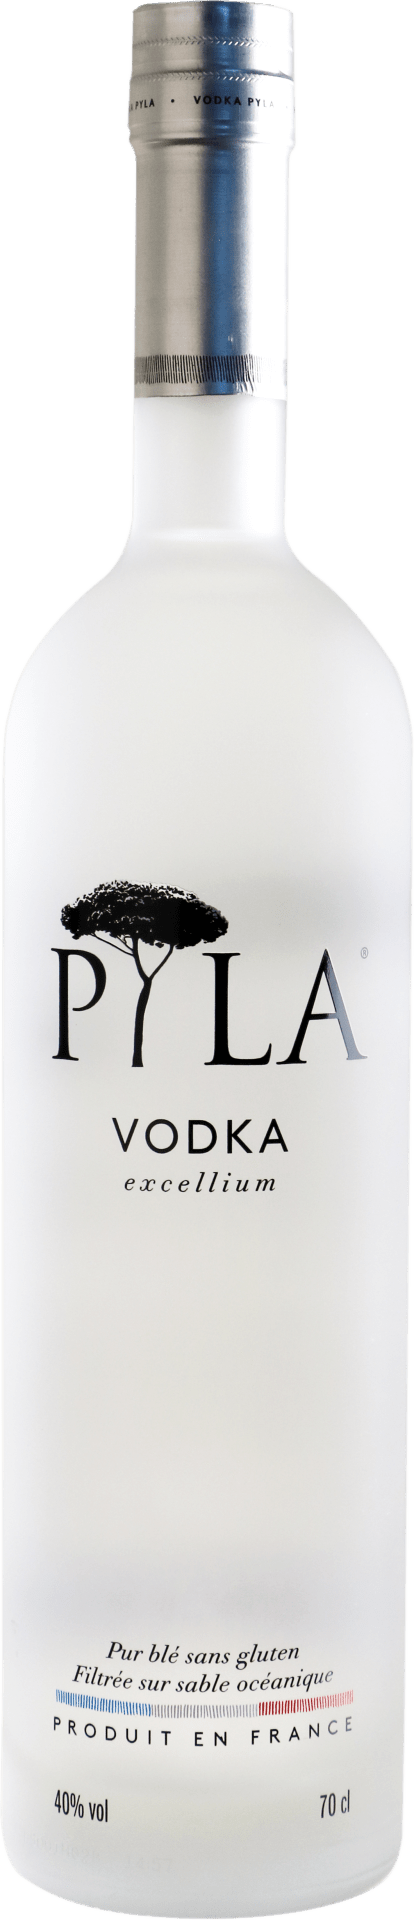 Pyla Vodka Minis 12x 5cl